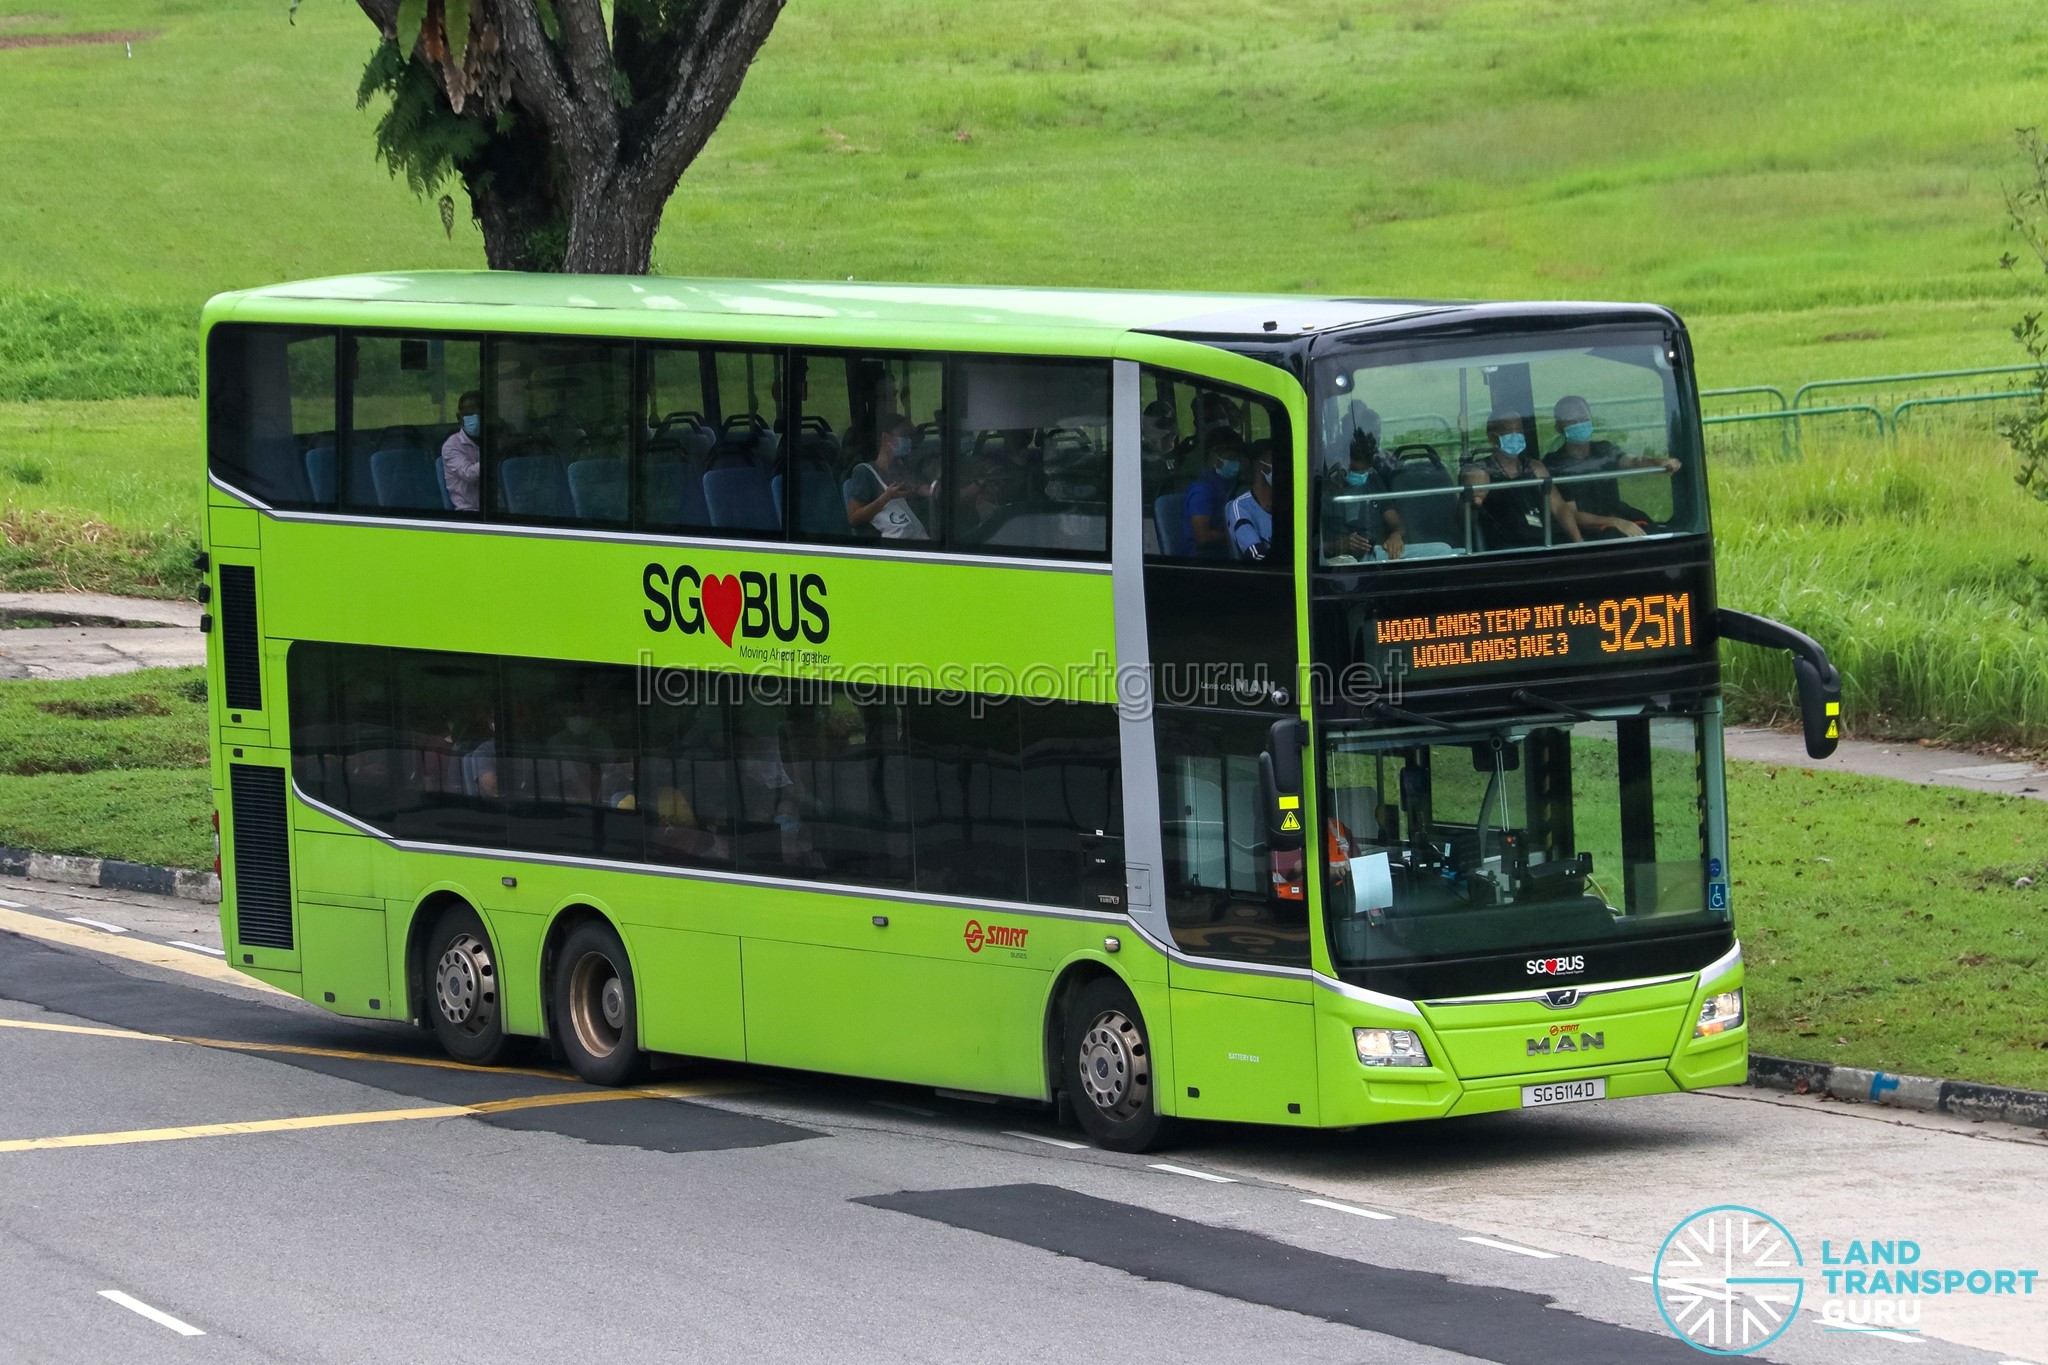 SMRT Bus Service 925M